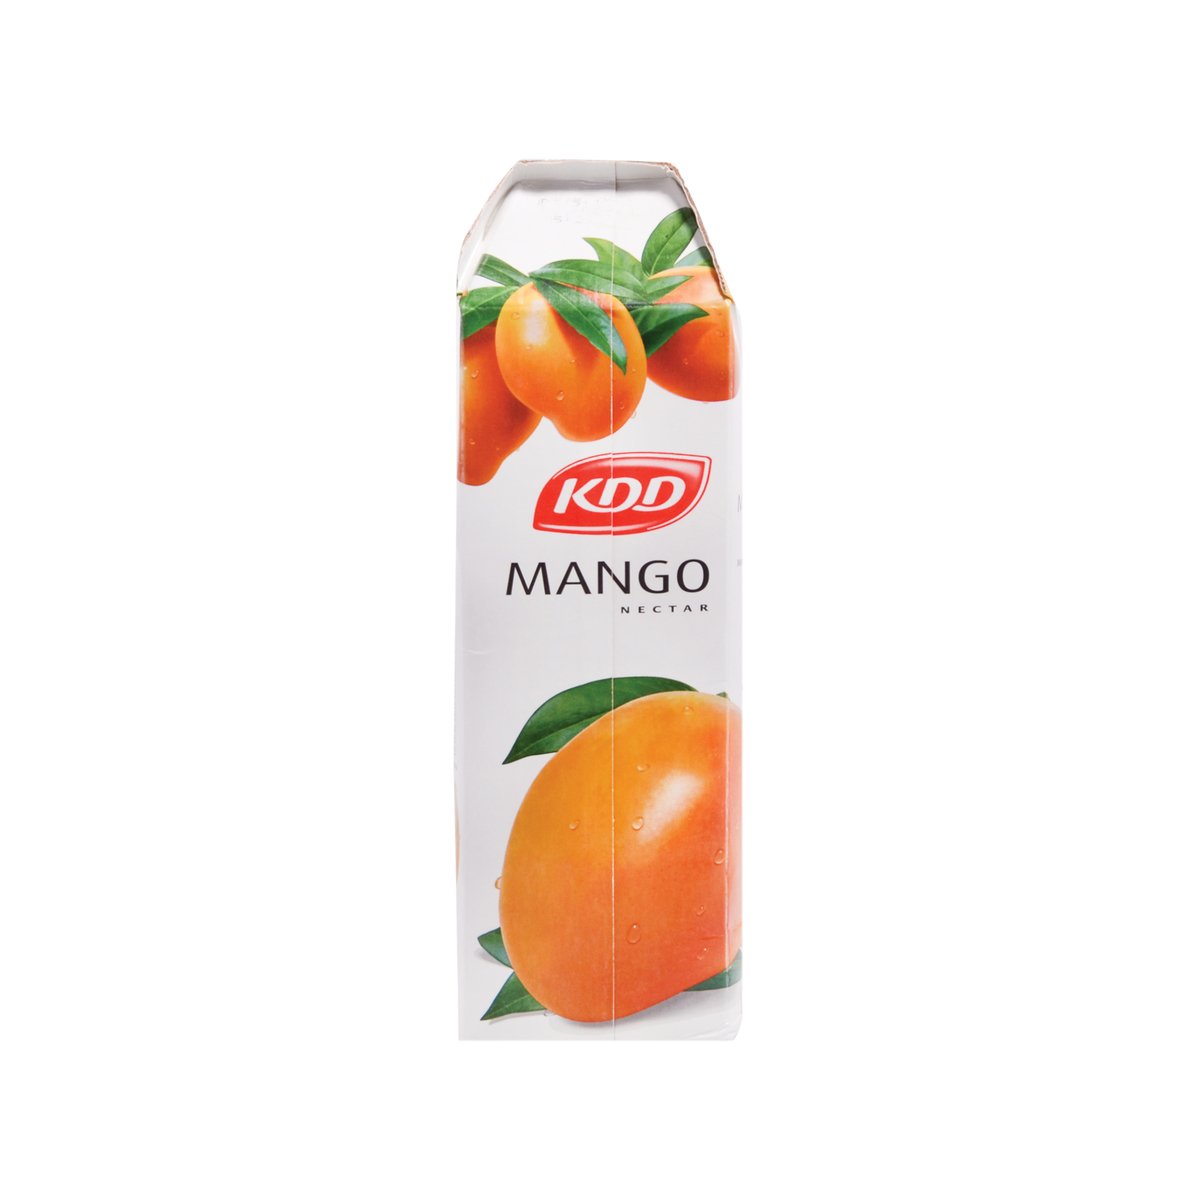 KDD Mango Nectar Juice 1Litre